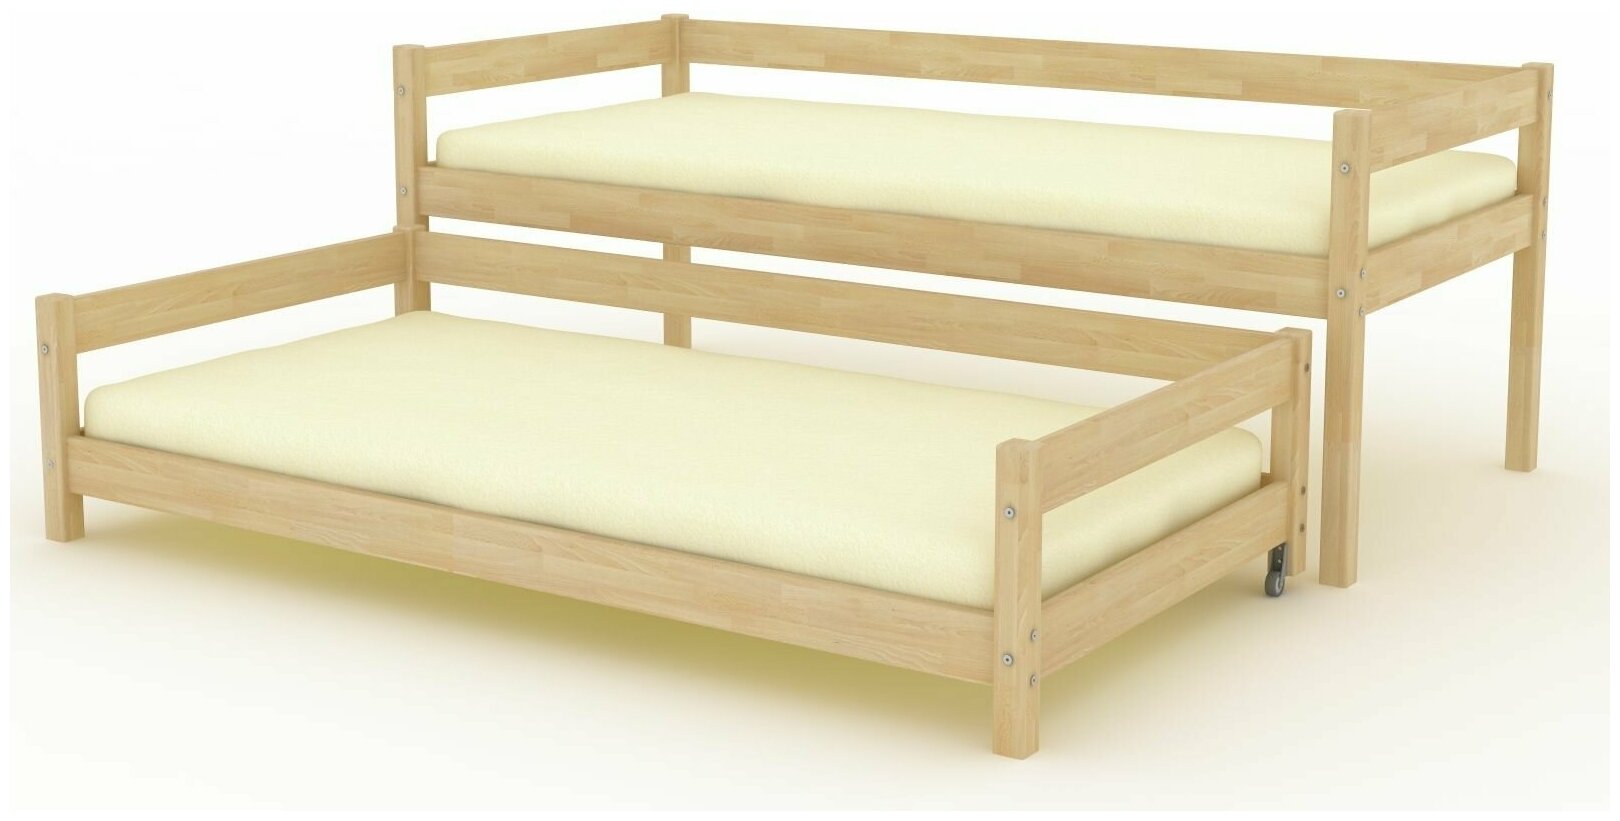 Двухъярусная-выкатная кровать "Берёзка 13" без покрытия, 90x190 см, ORTMEX